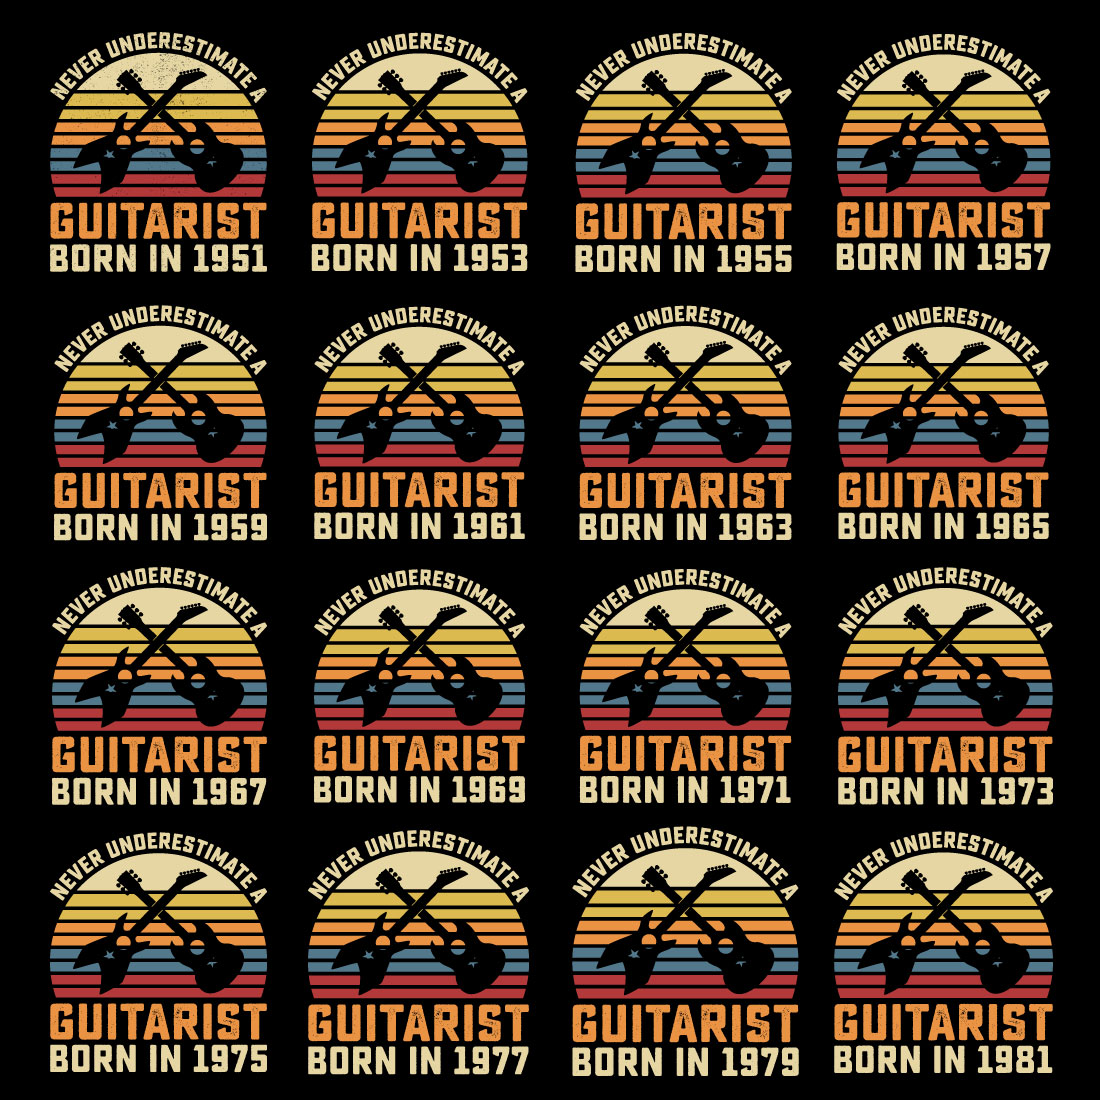 49 Guitar Vintage T Shirt Design Bundle Vol-2 cover image.